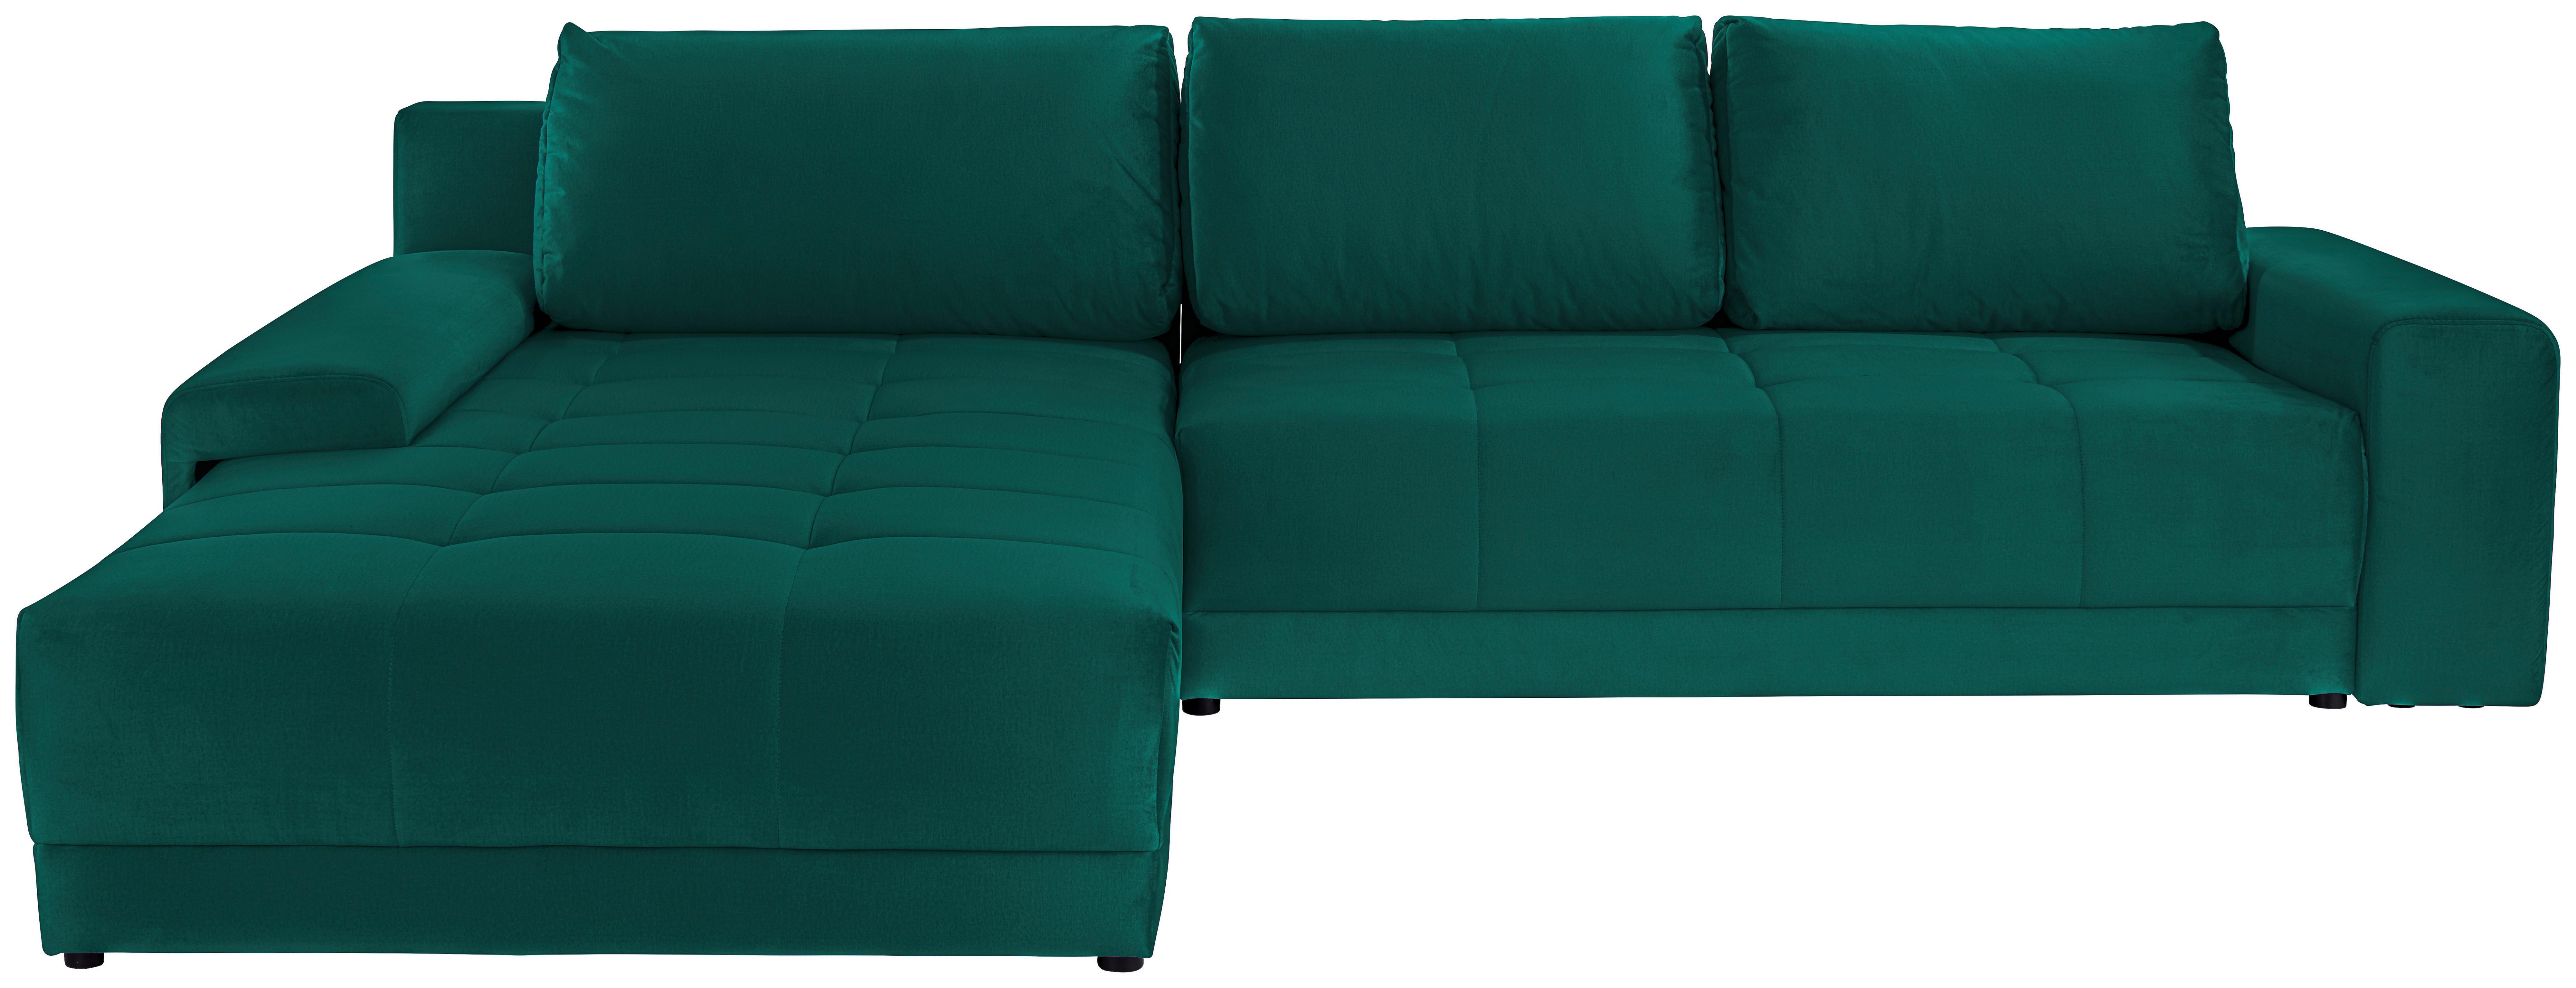 Sjedeća Garnitura Adria - smaragdno zelena, Modern, tekstil (213/308cm) - Based